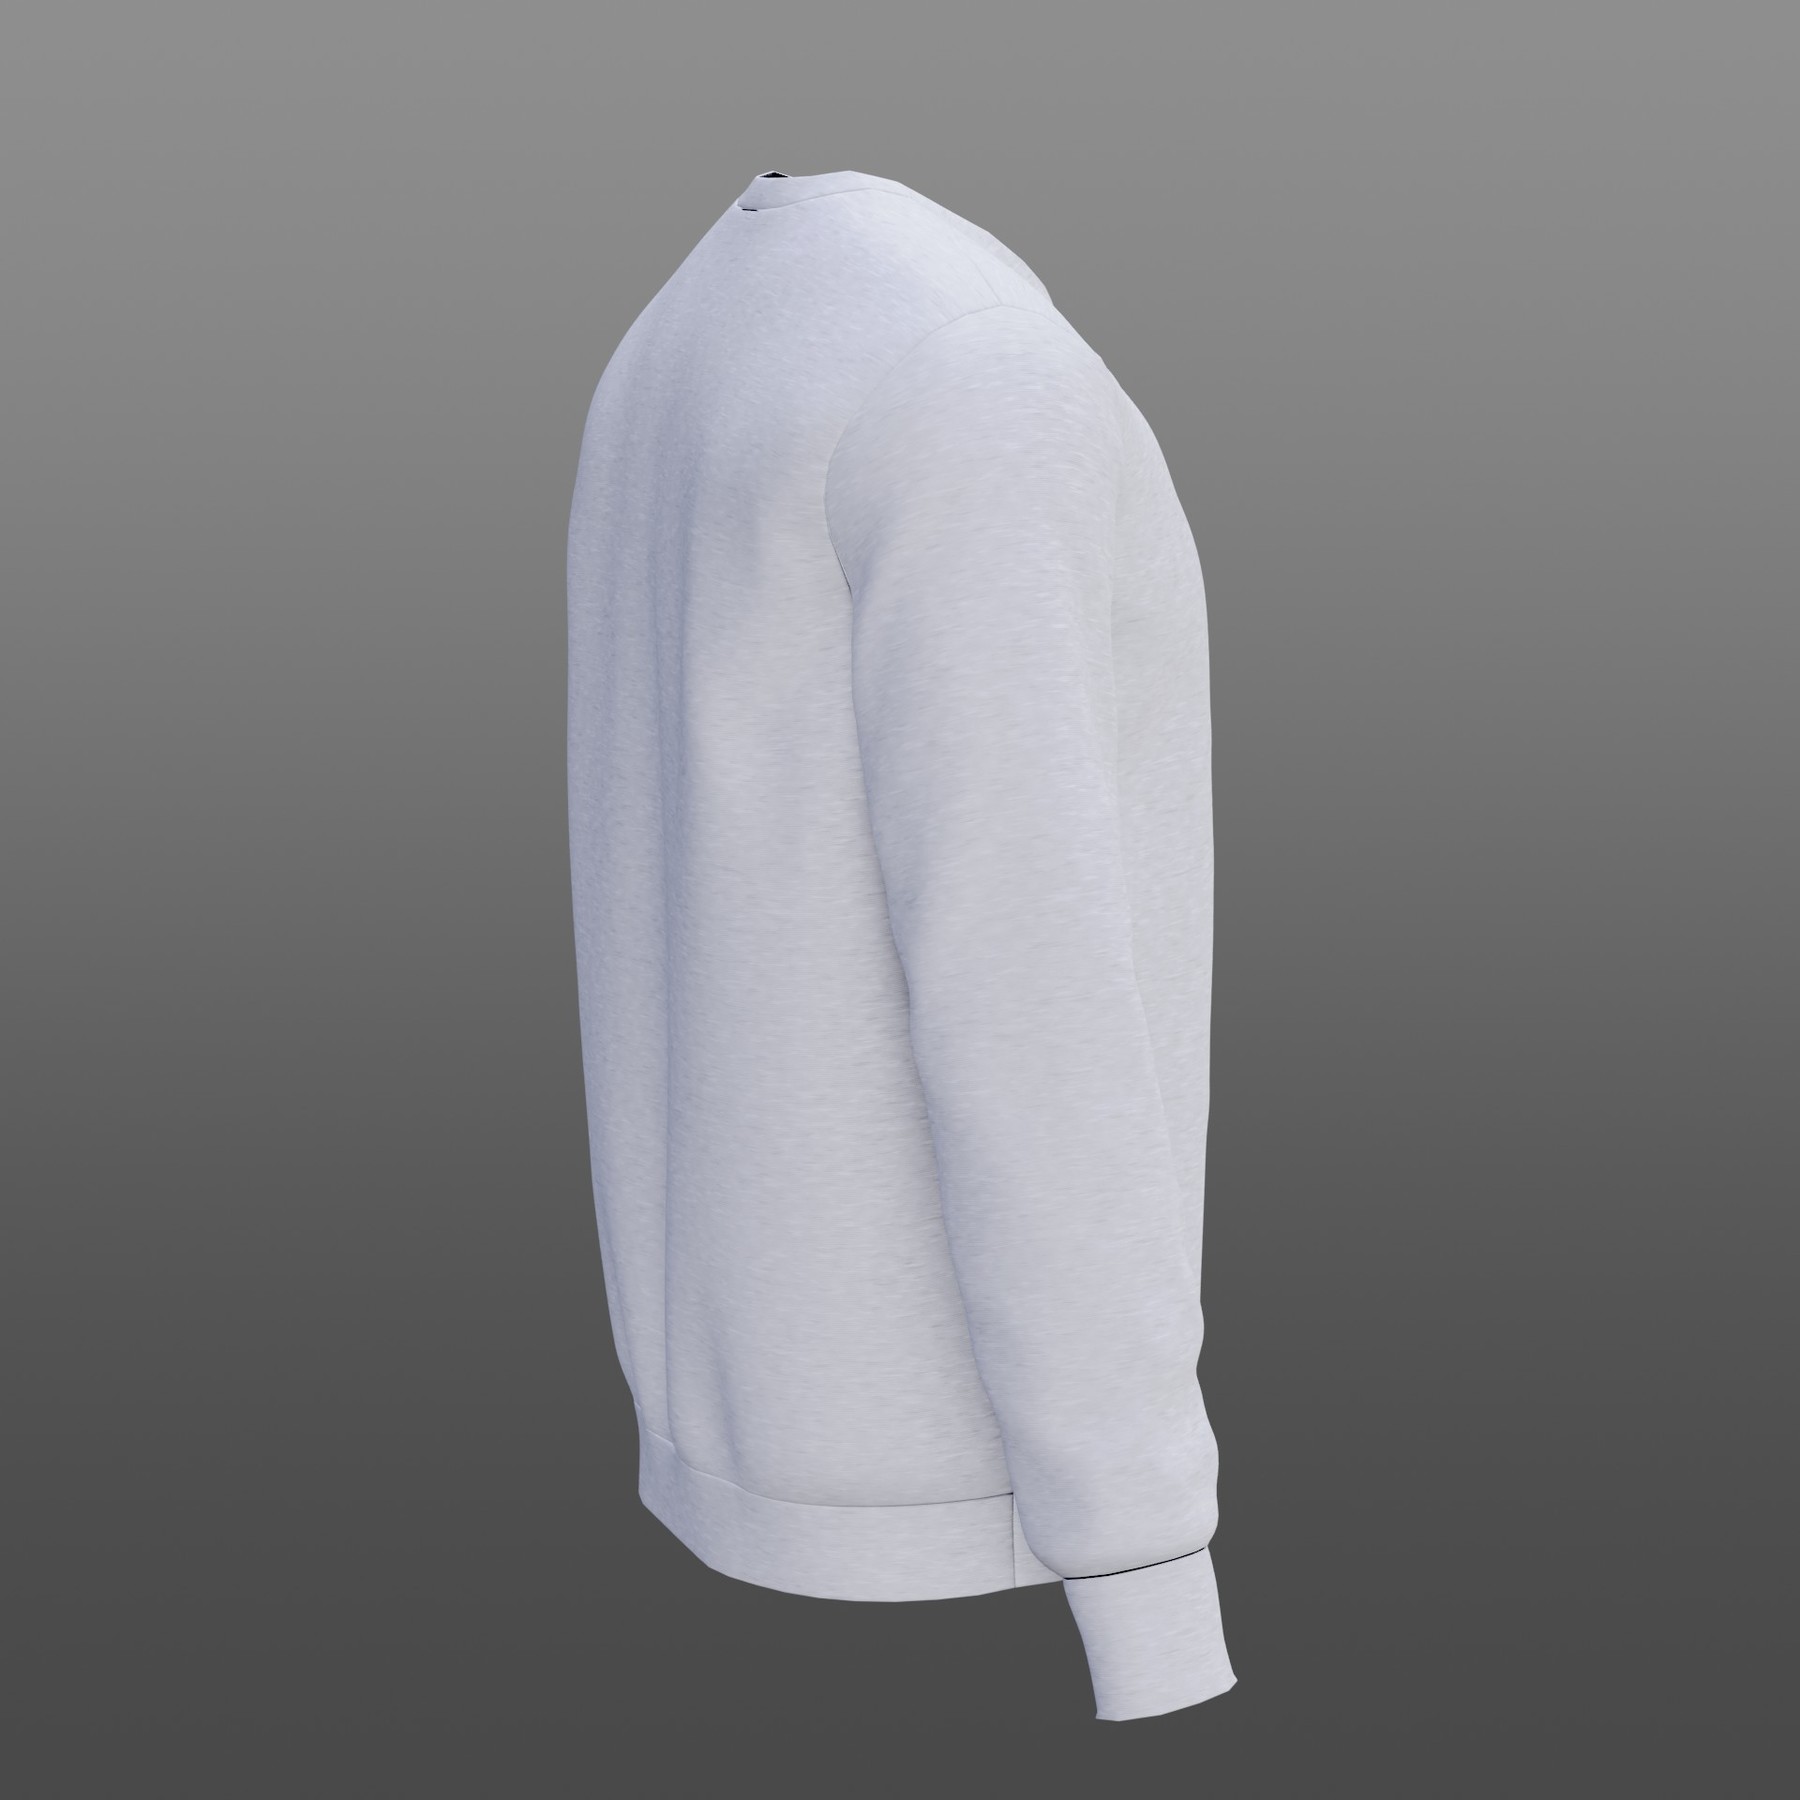 ArtStation - white sweatshirt 3D model | Resources